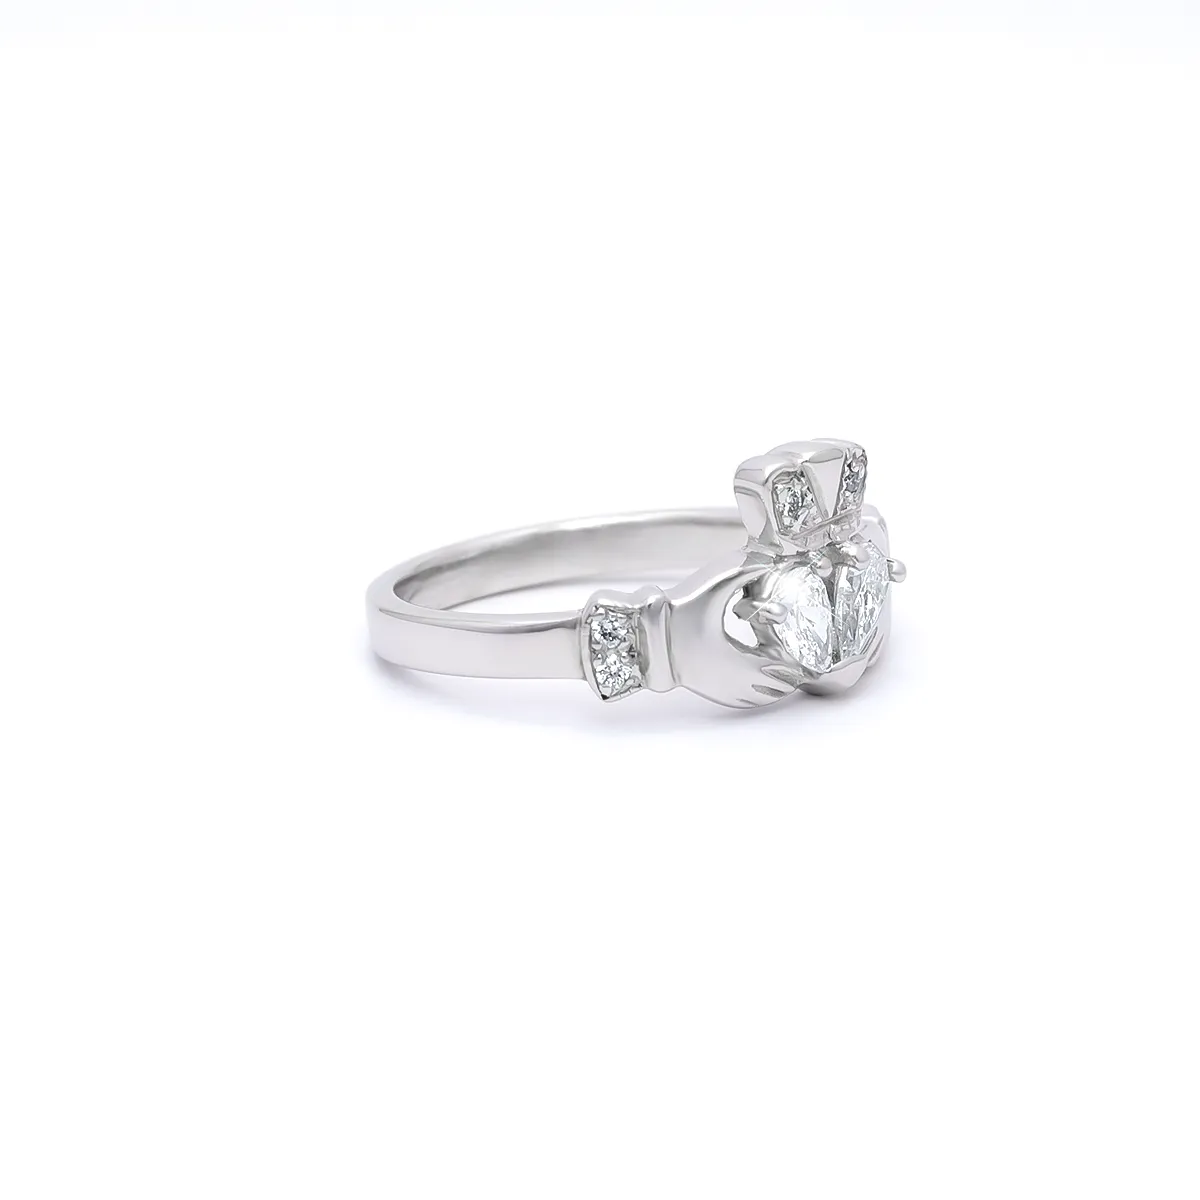 IJC00015 White Gold Diamond Claddagh Ring 03...